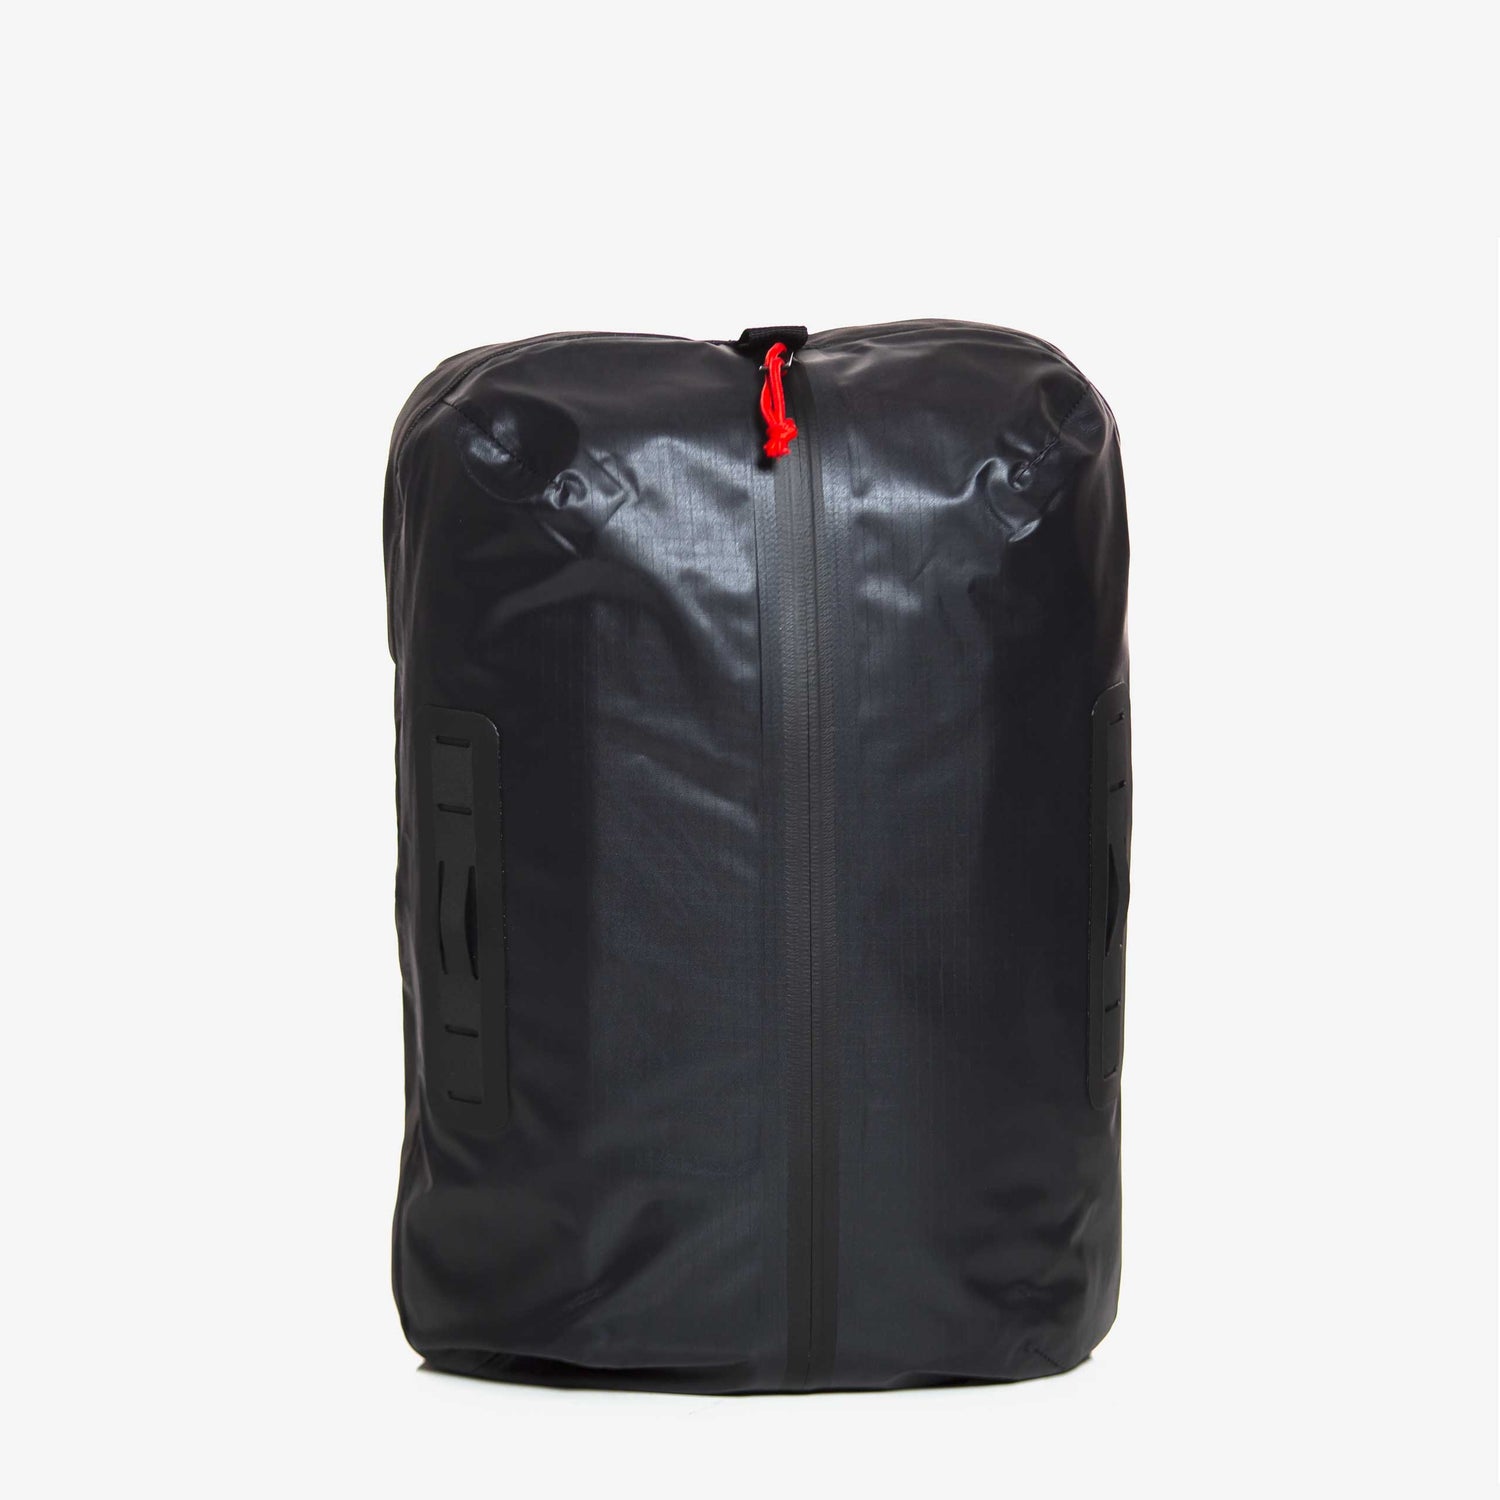 Wet-Dry Bag